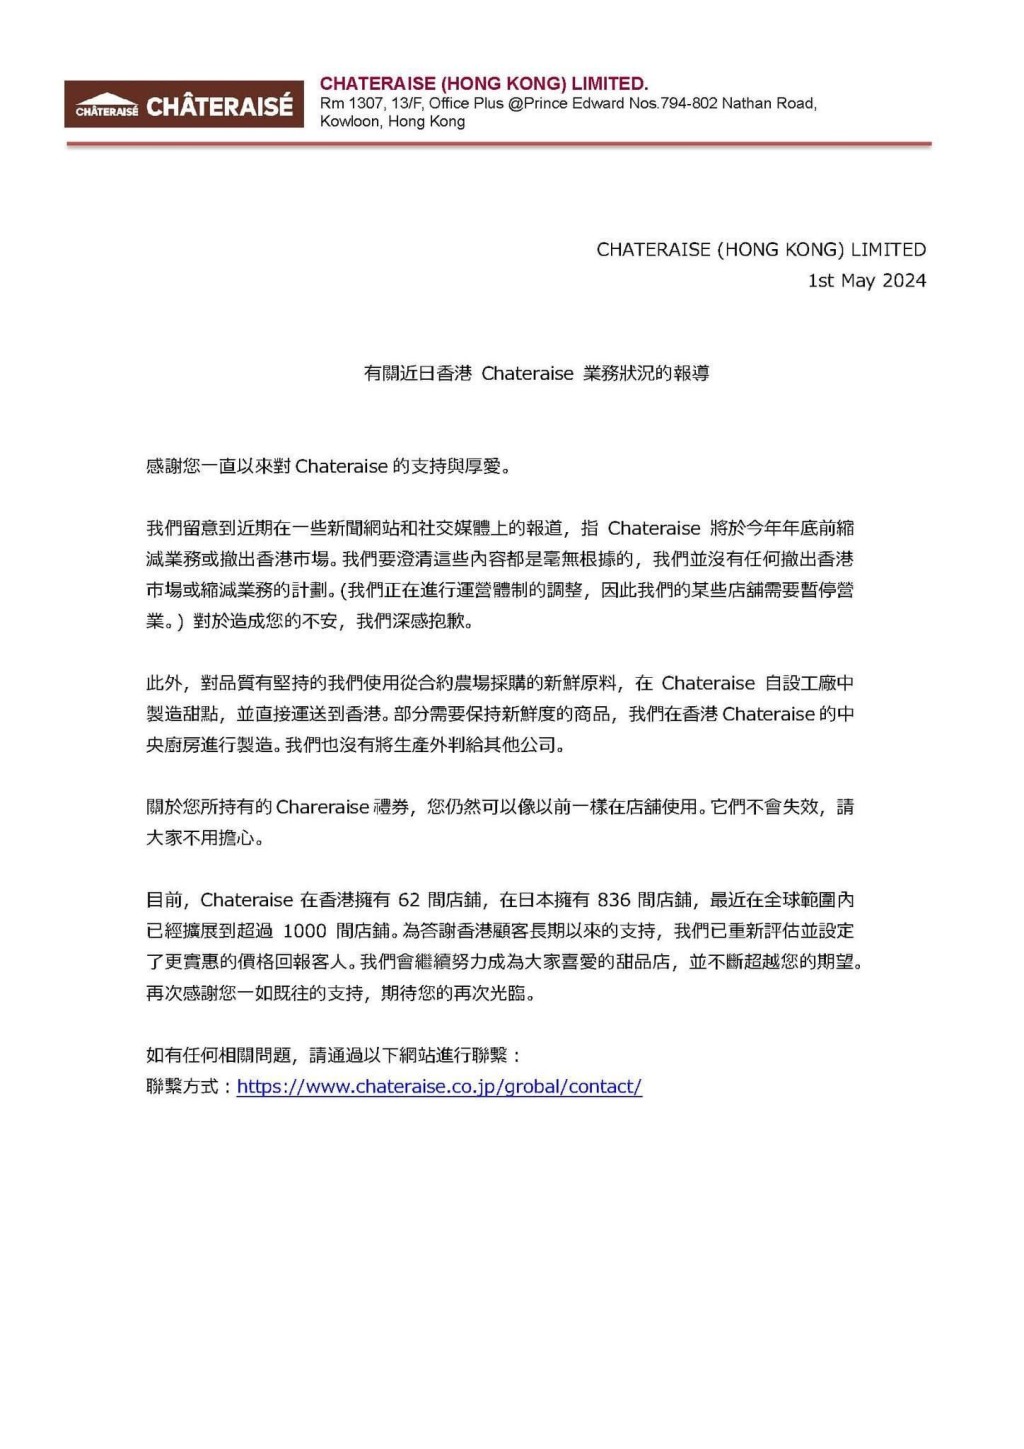 Chateraise公告指，缩减业务或撤出香港市场的报道毫无根据。